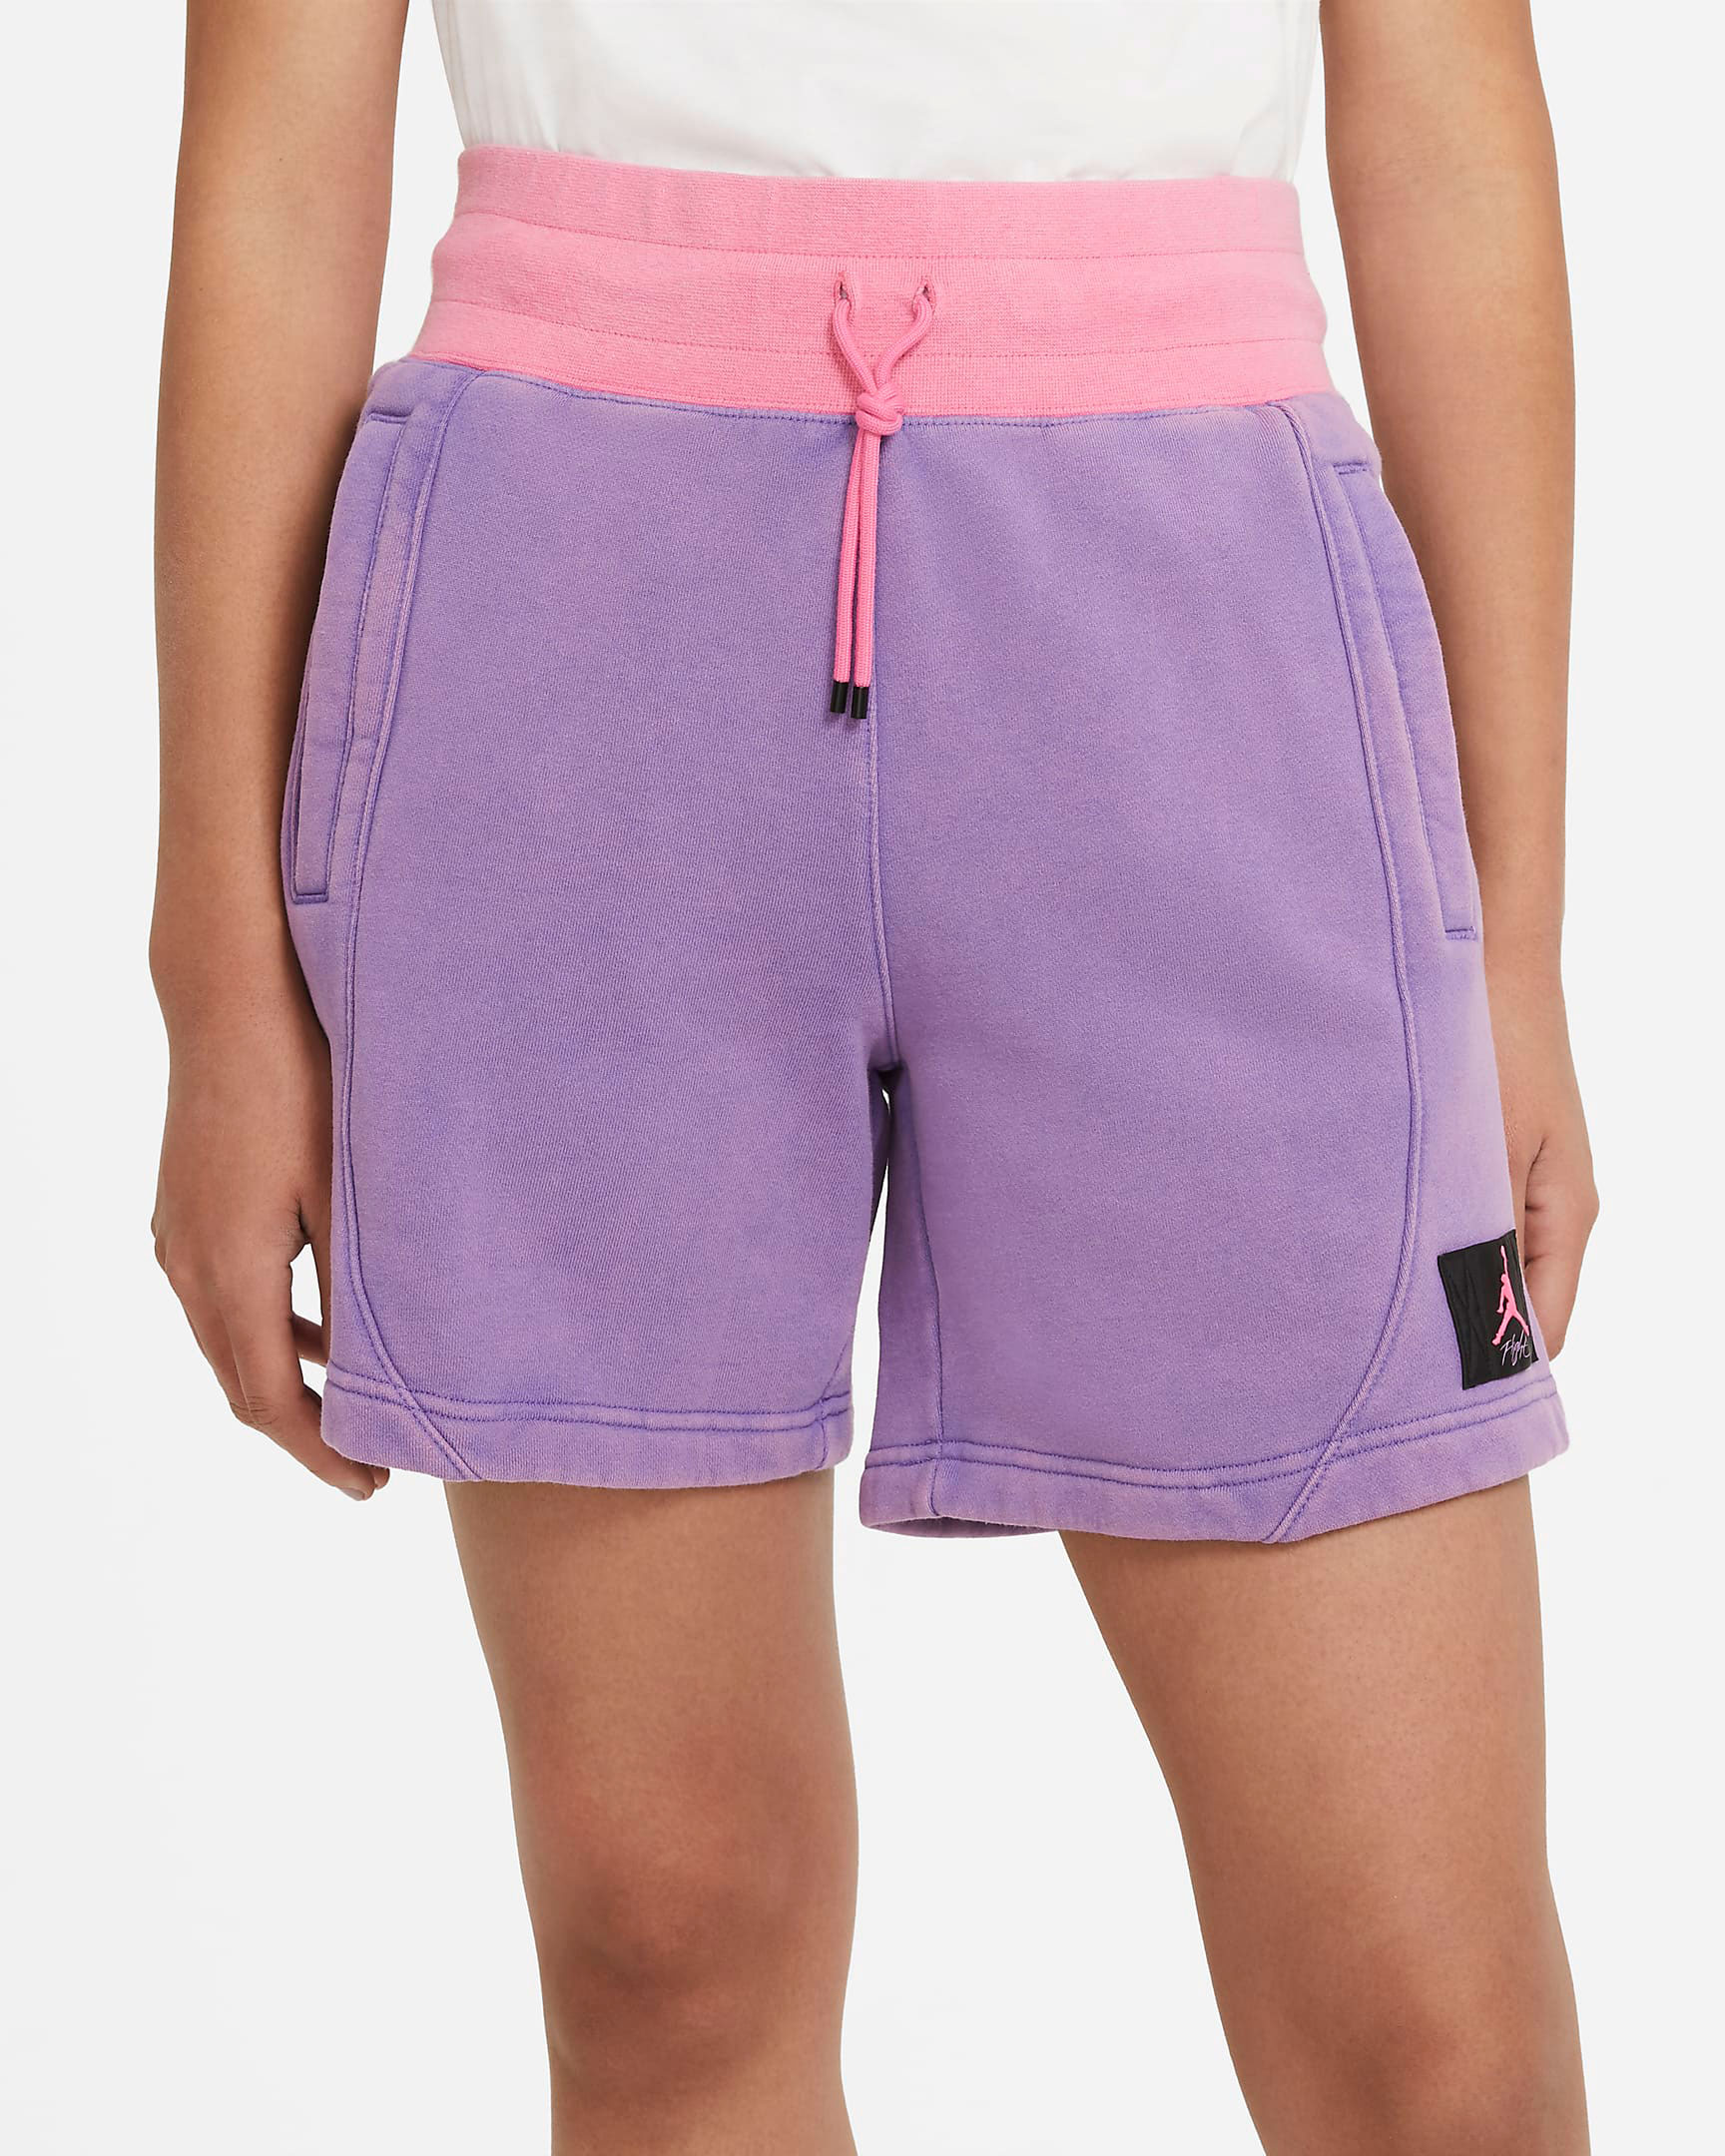 jordan-flight-womens-shorts-purple-pink-1